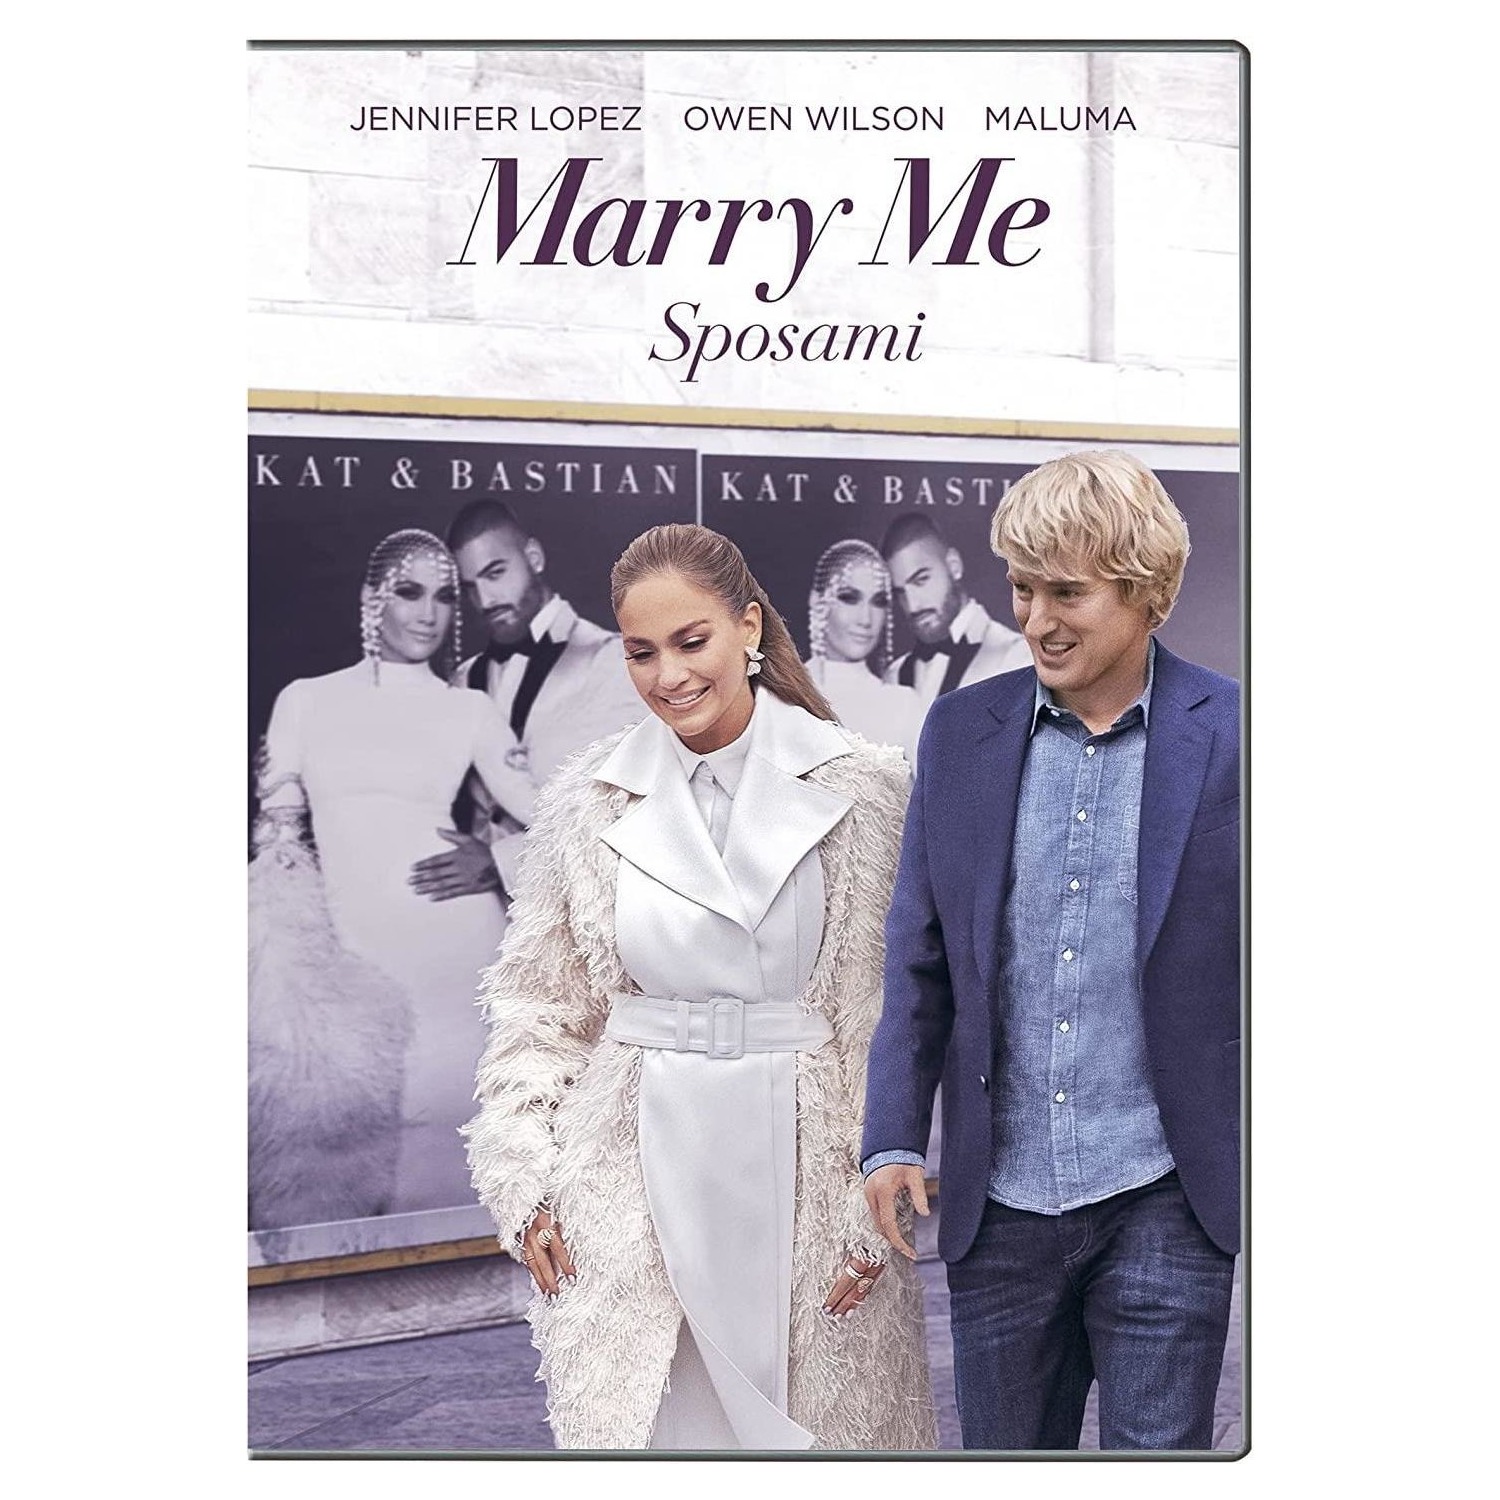 Immagine per DVD Marry Me - Sposami da DIMOStore